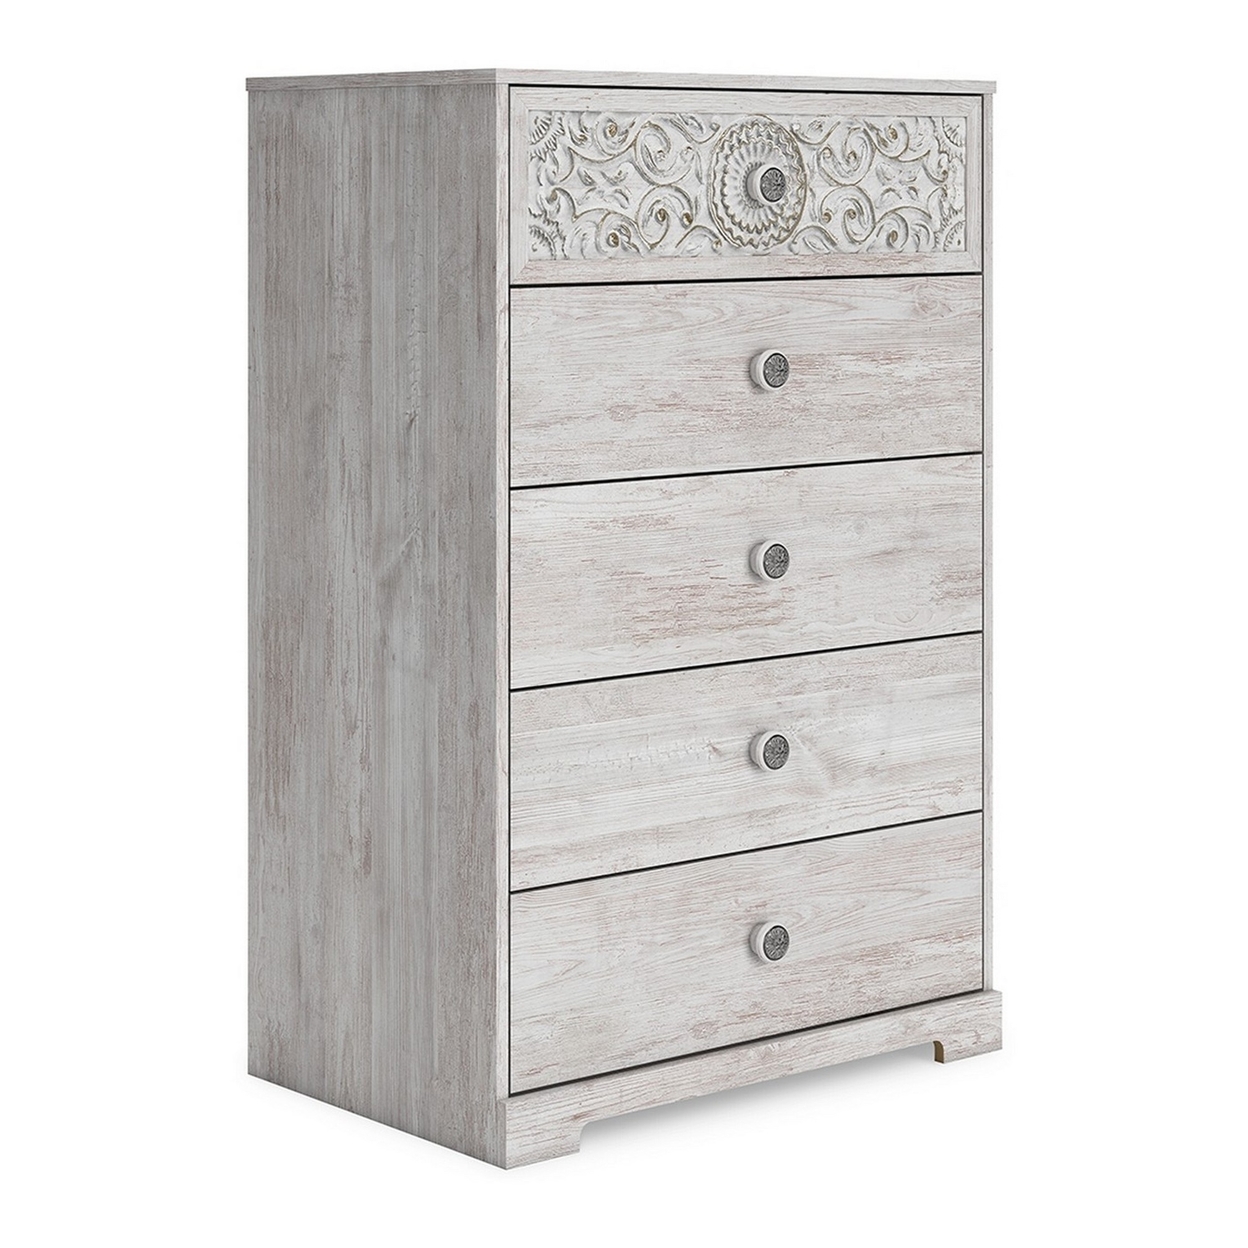 46 Inch 5 Drawer Modern Tall Dresser Chest, Whitewashed Carved Design Wood- Saltoro Sherpi